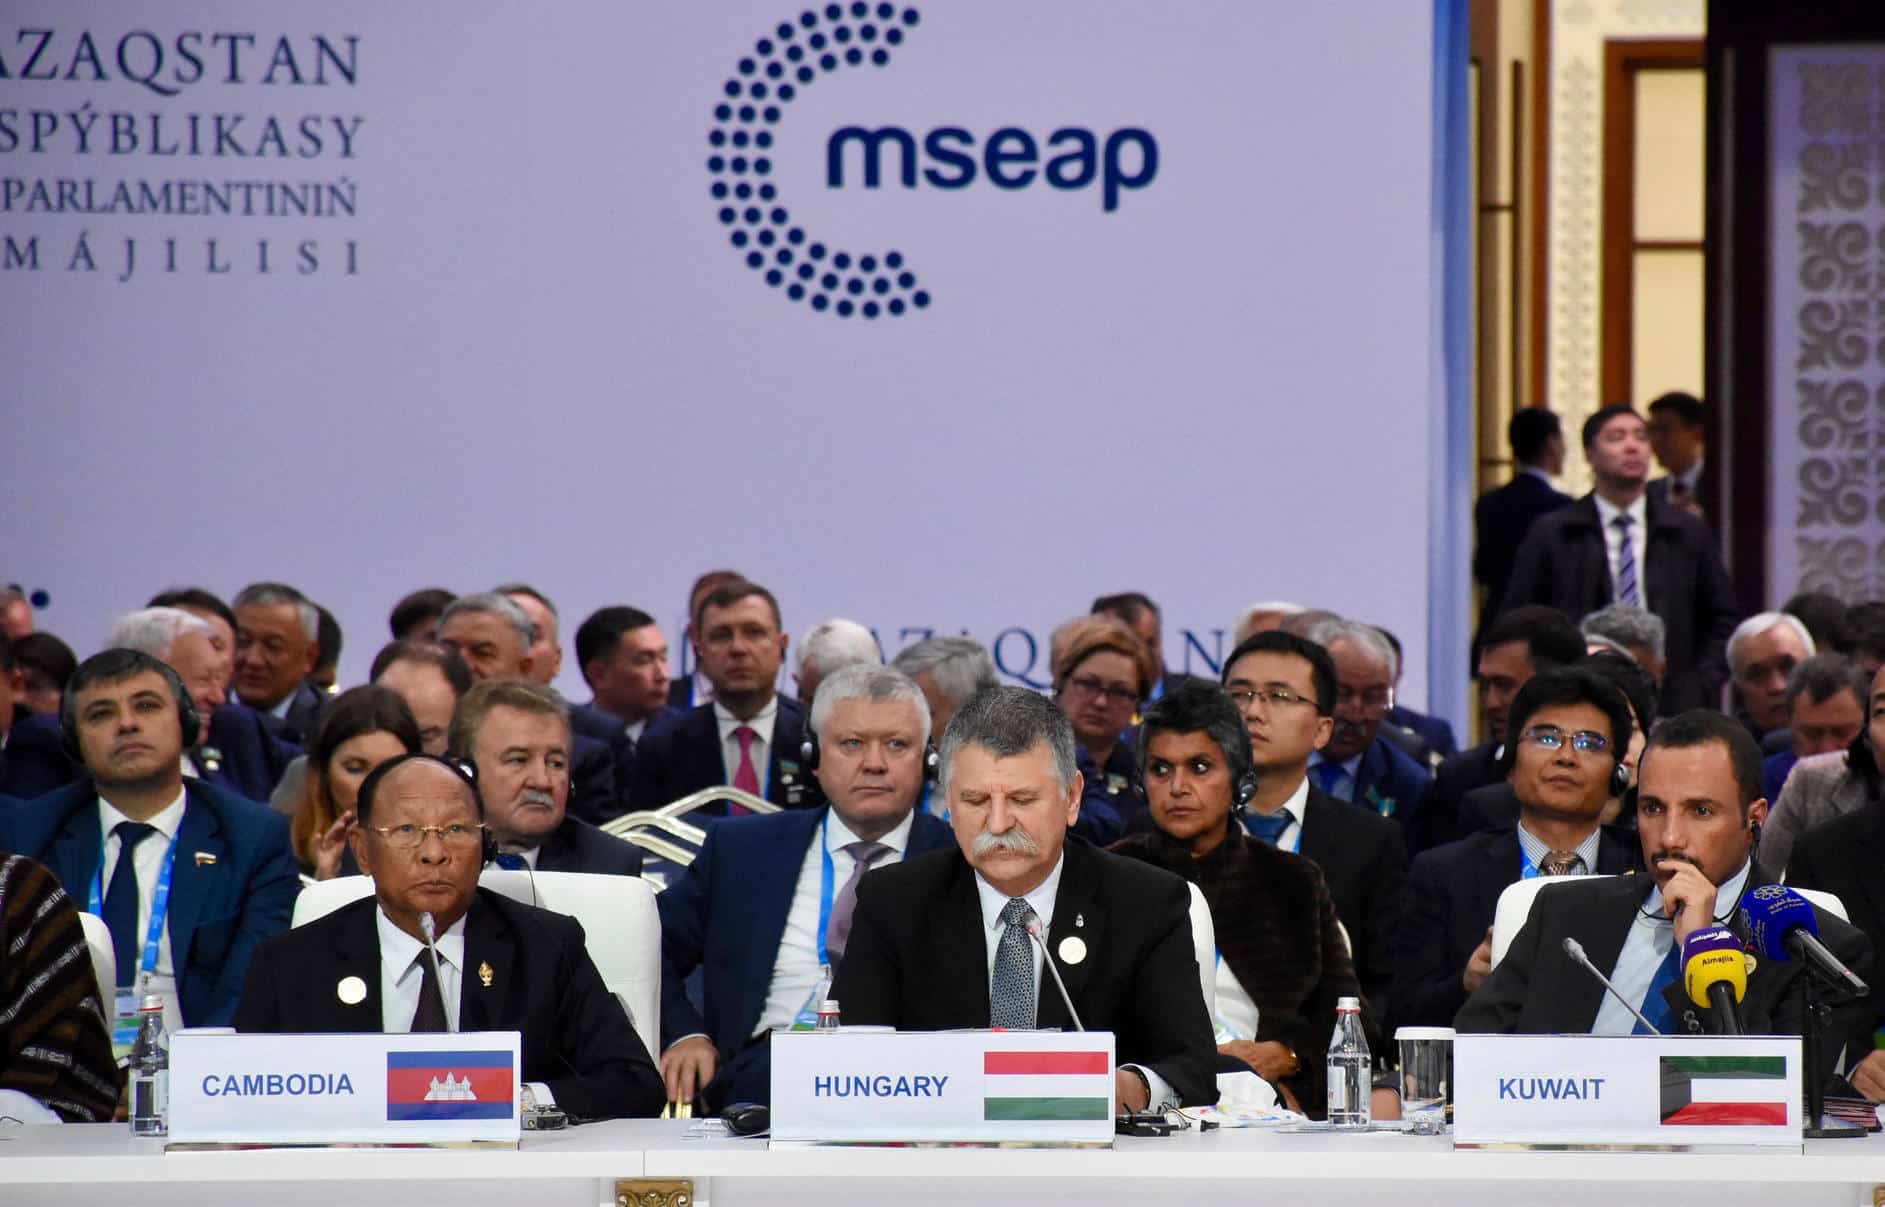 Kövér attends Eurasian house speakers' summit in Kazakhstan